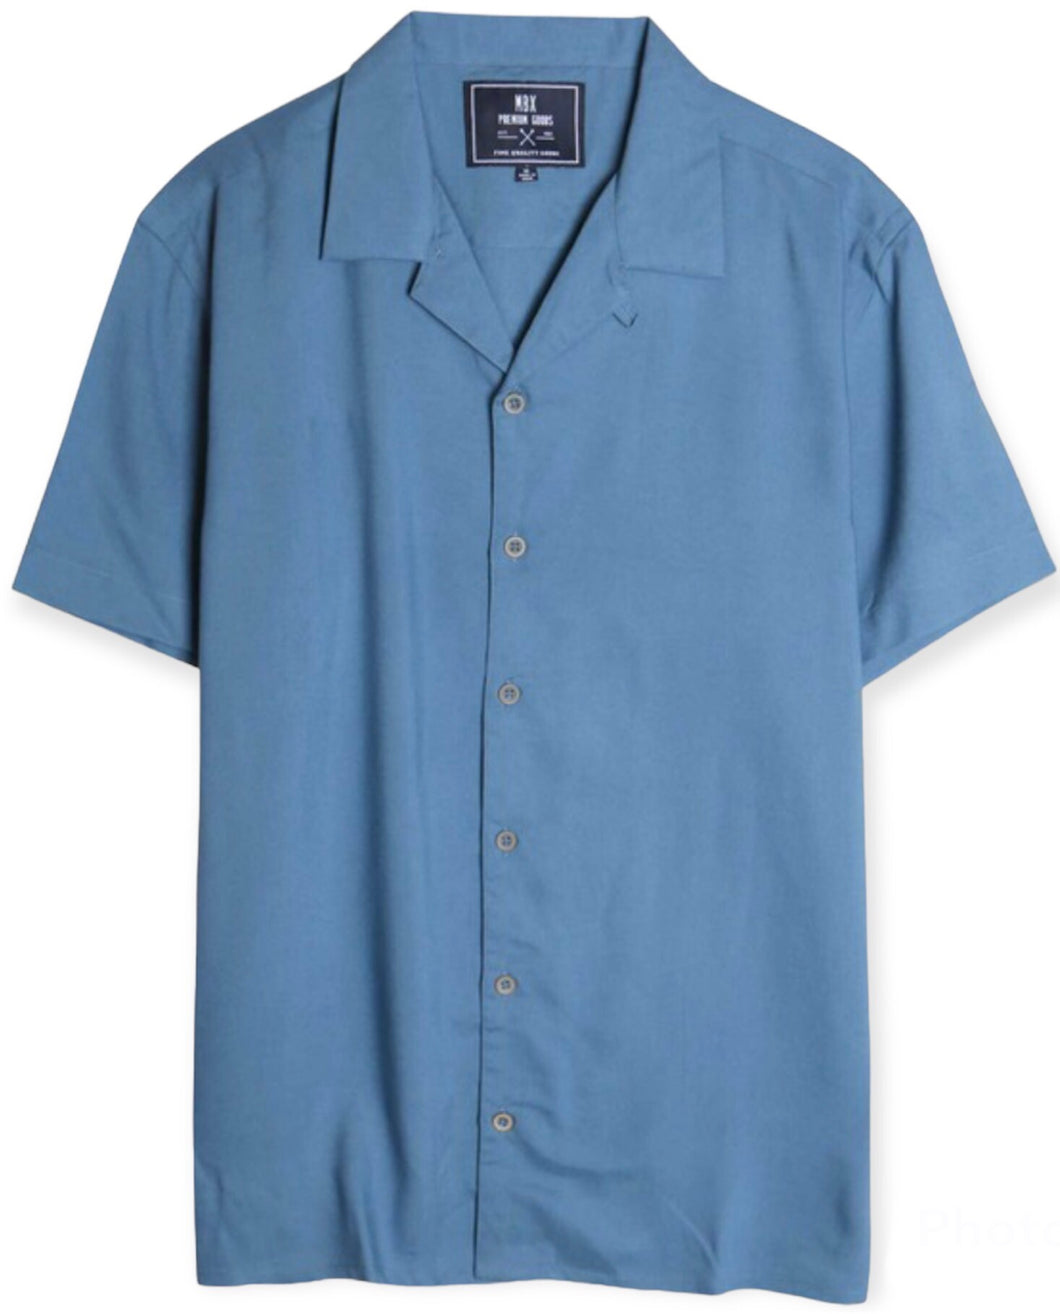 Cypress Monterey Button Down Shirt